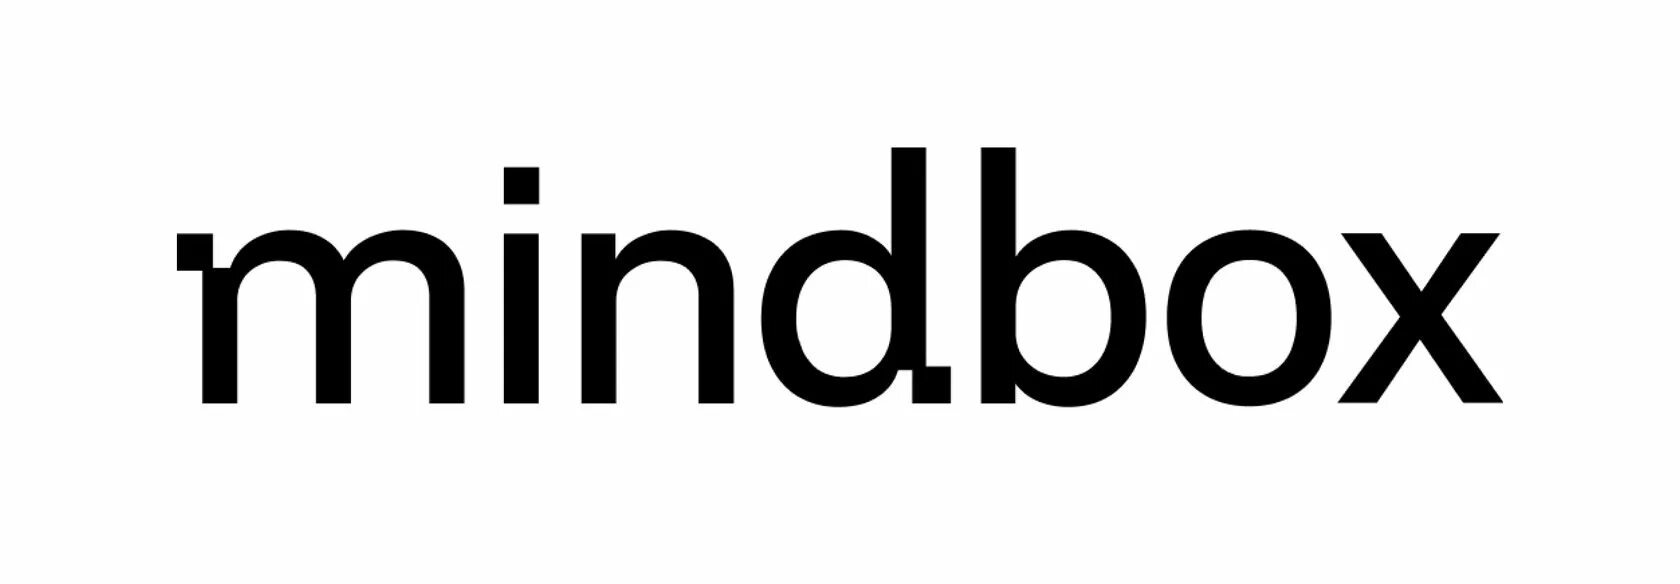 Mind box. Mindbox logo. Mindbox icon. Mindbox Интерфейс. Mindbox logo PNG.